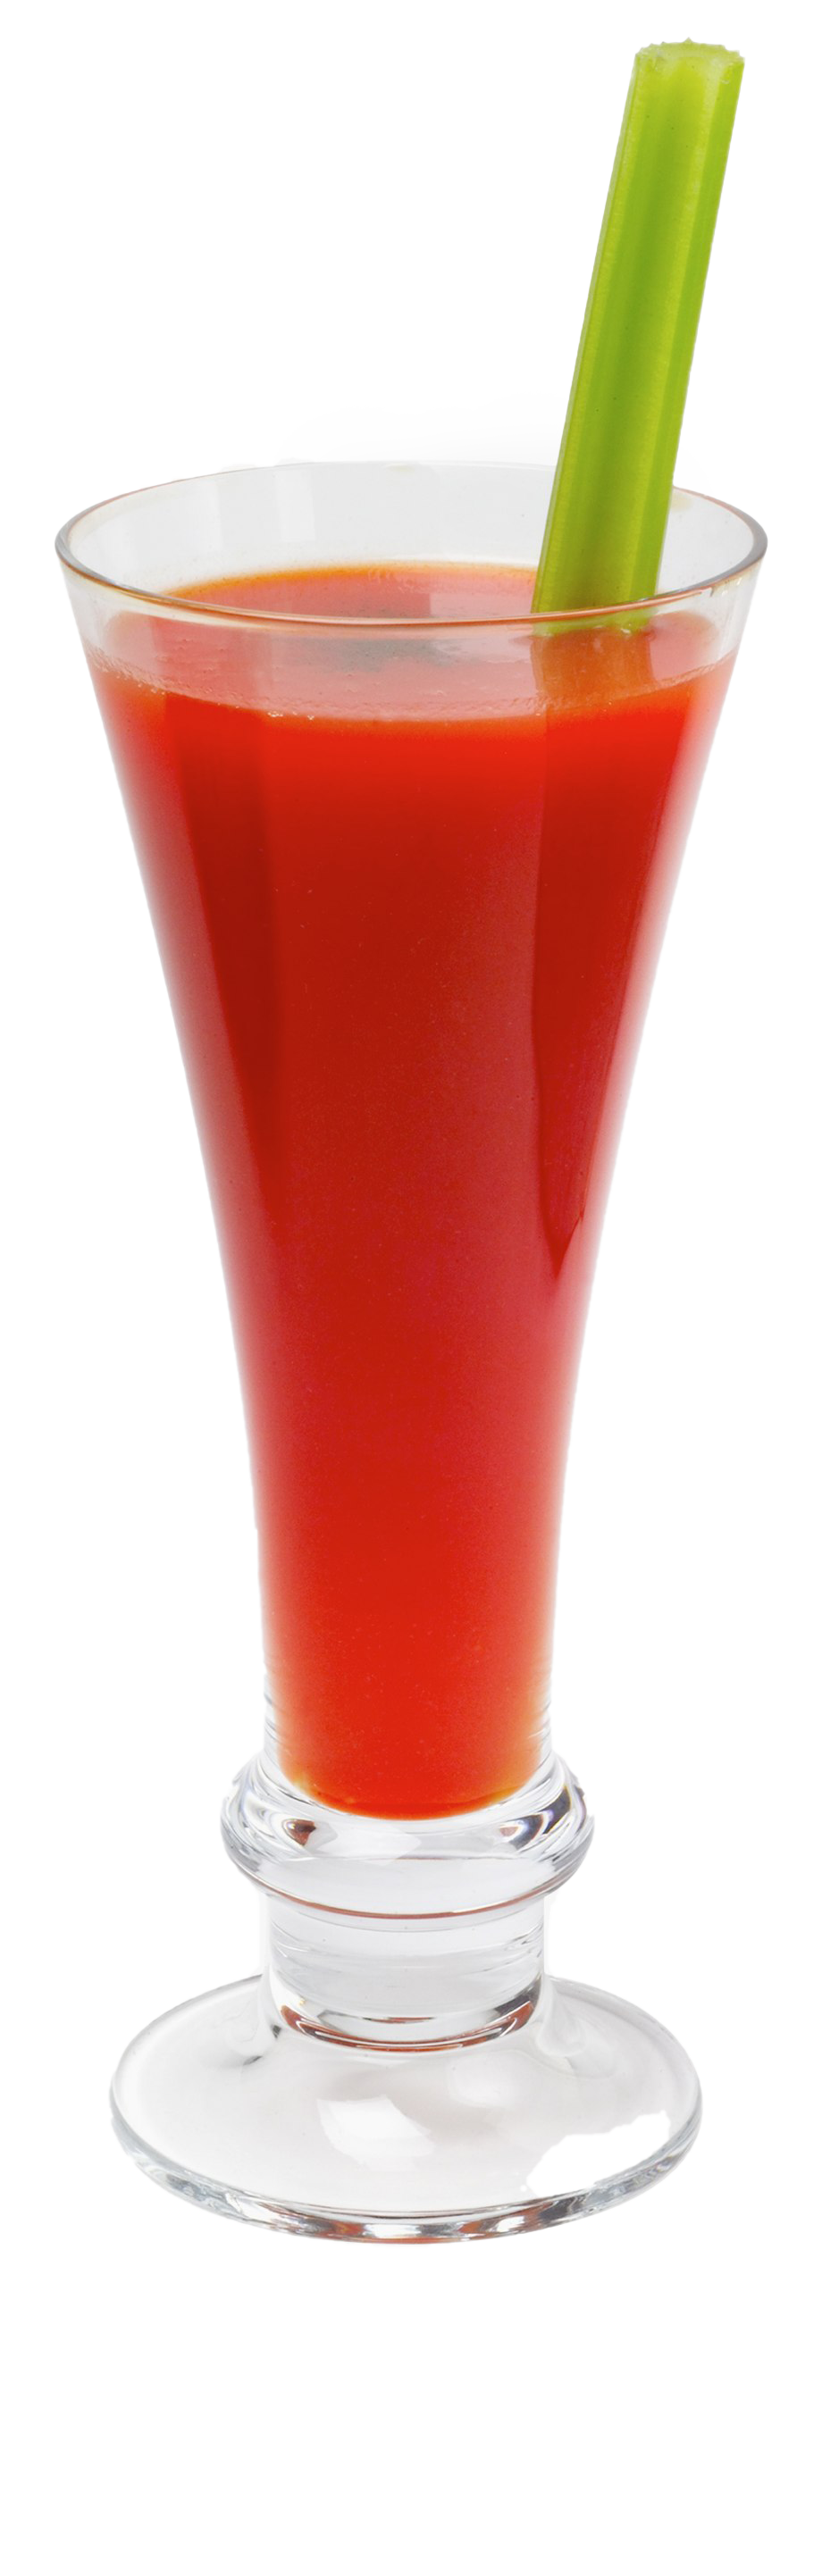 Tomato Juice Glass PNG Transparent Image